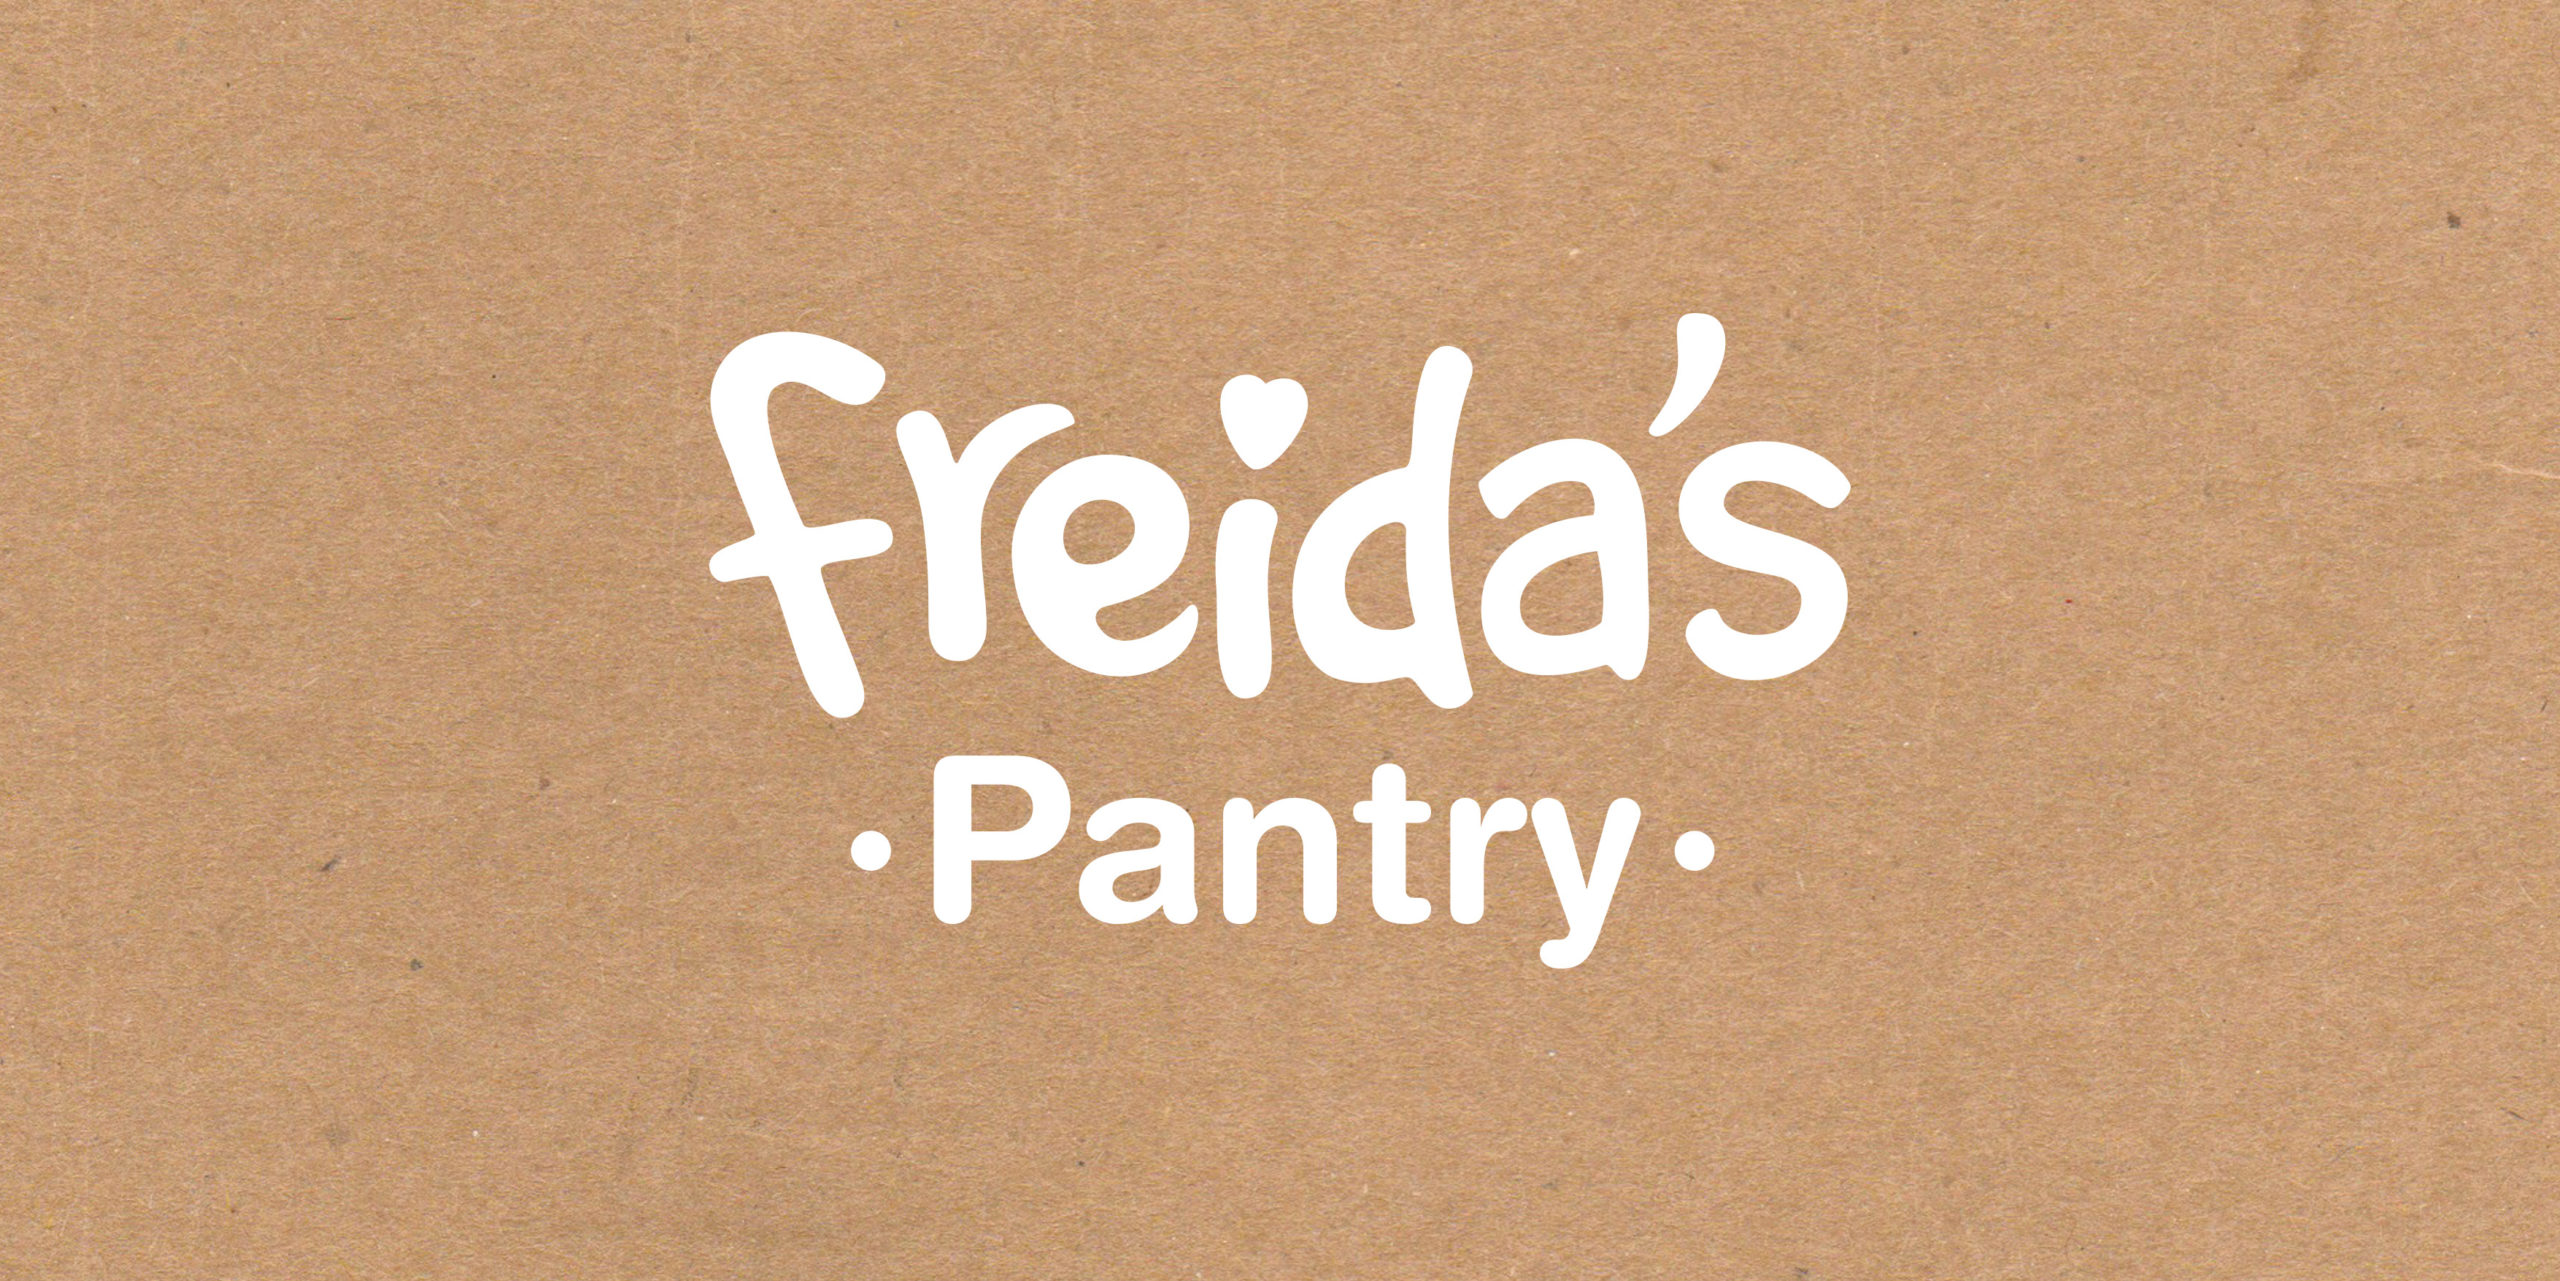 Freidas Pantry Logo by Toast Food